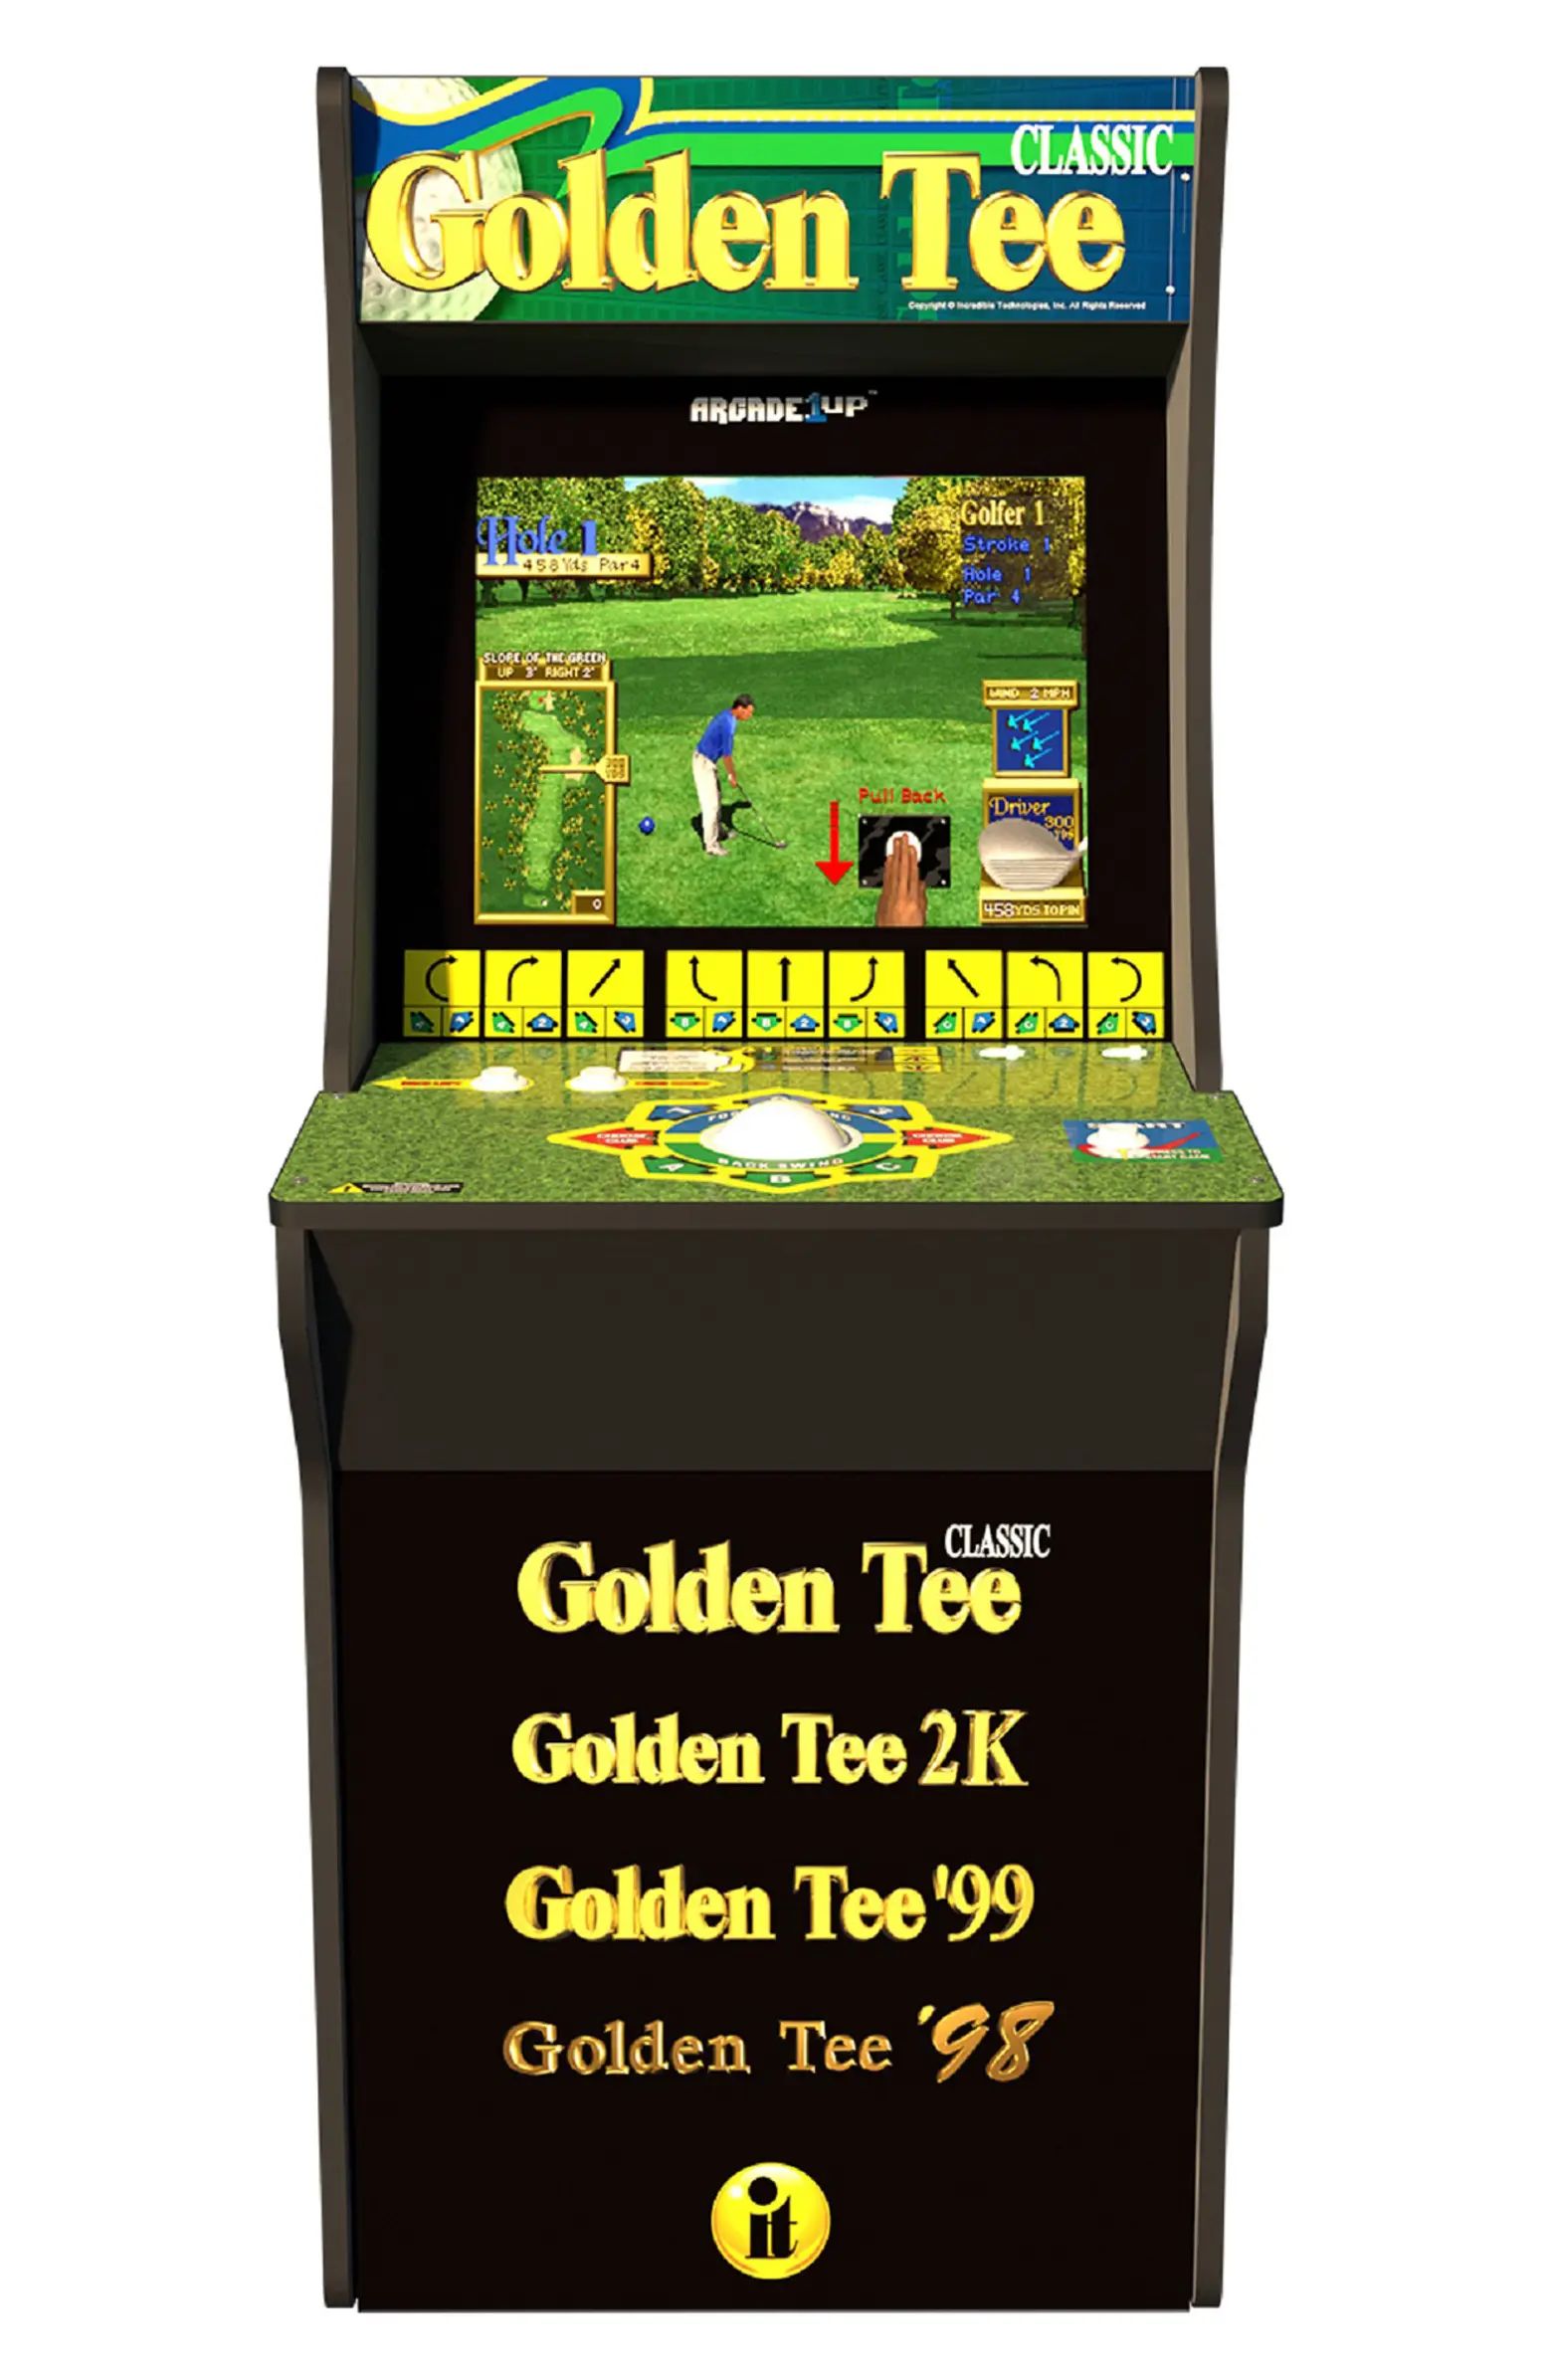 Golden Tee Full Size Arcade Cabinet | Nordstrom